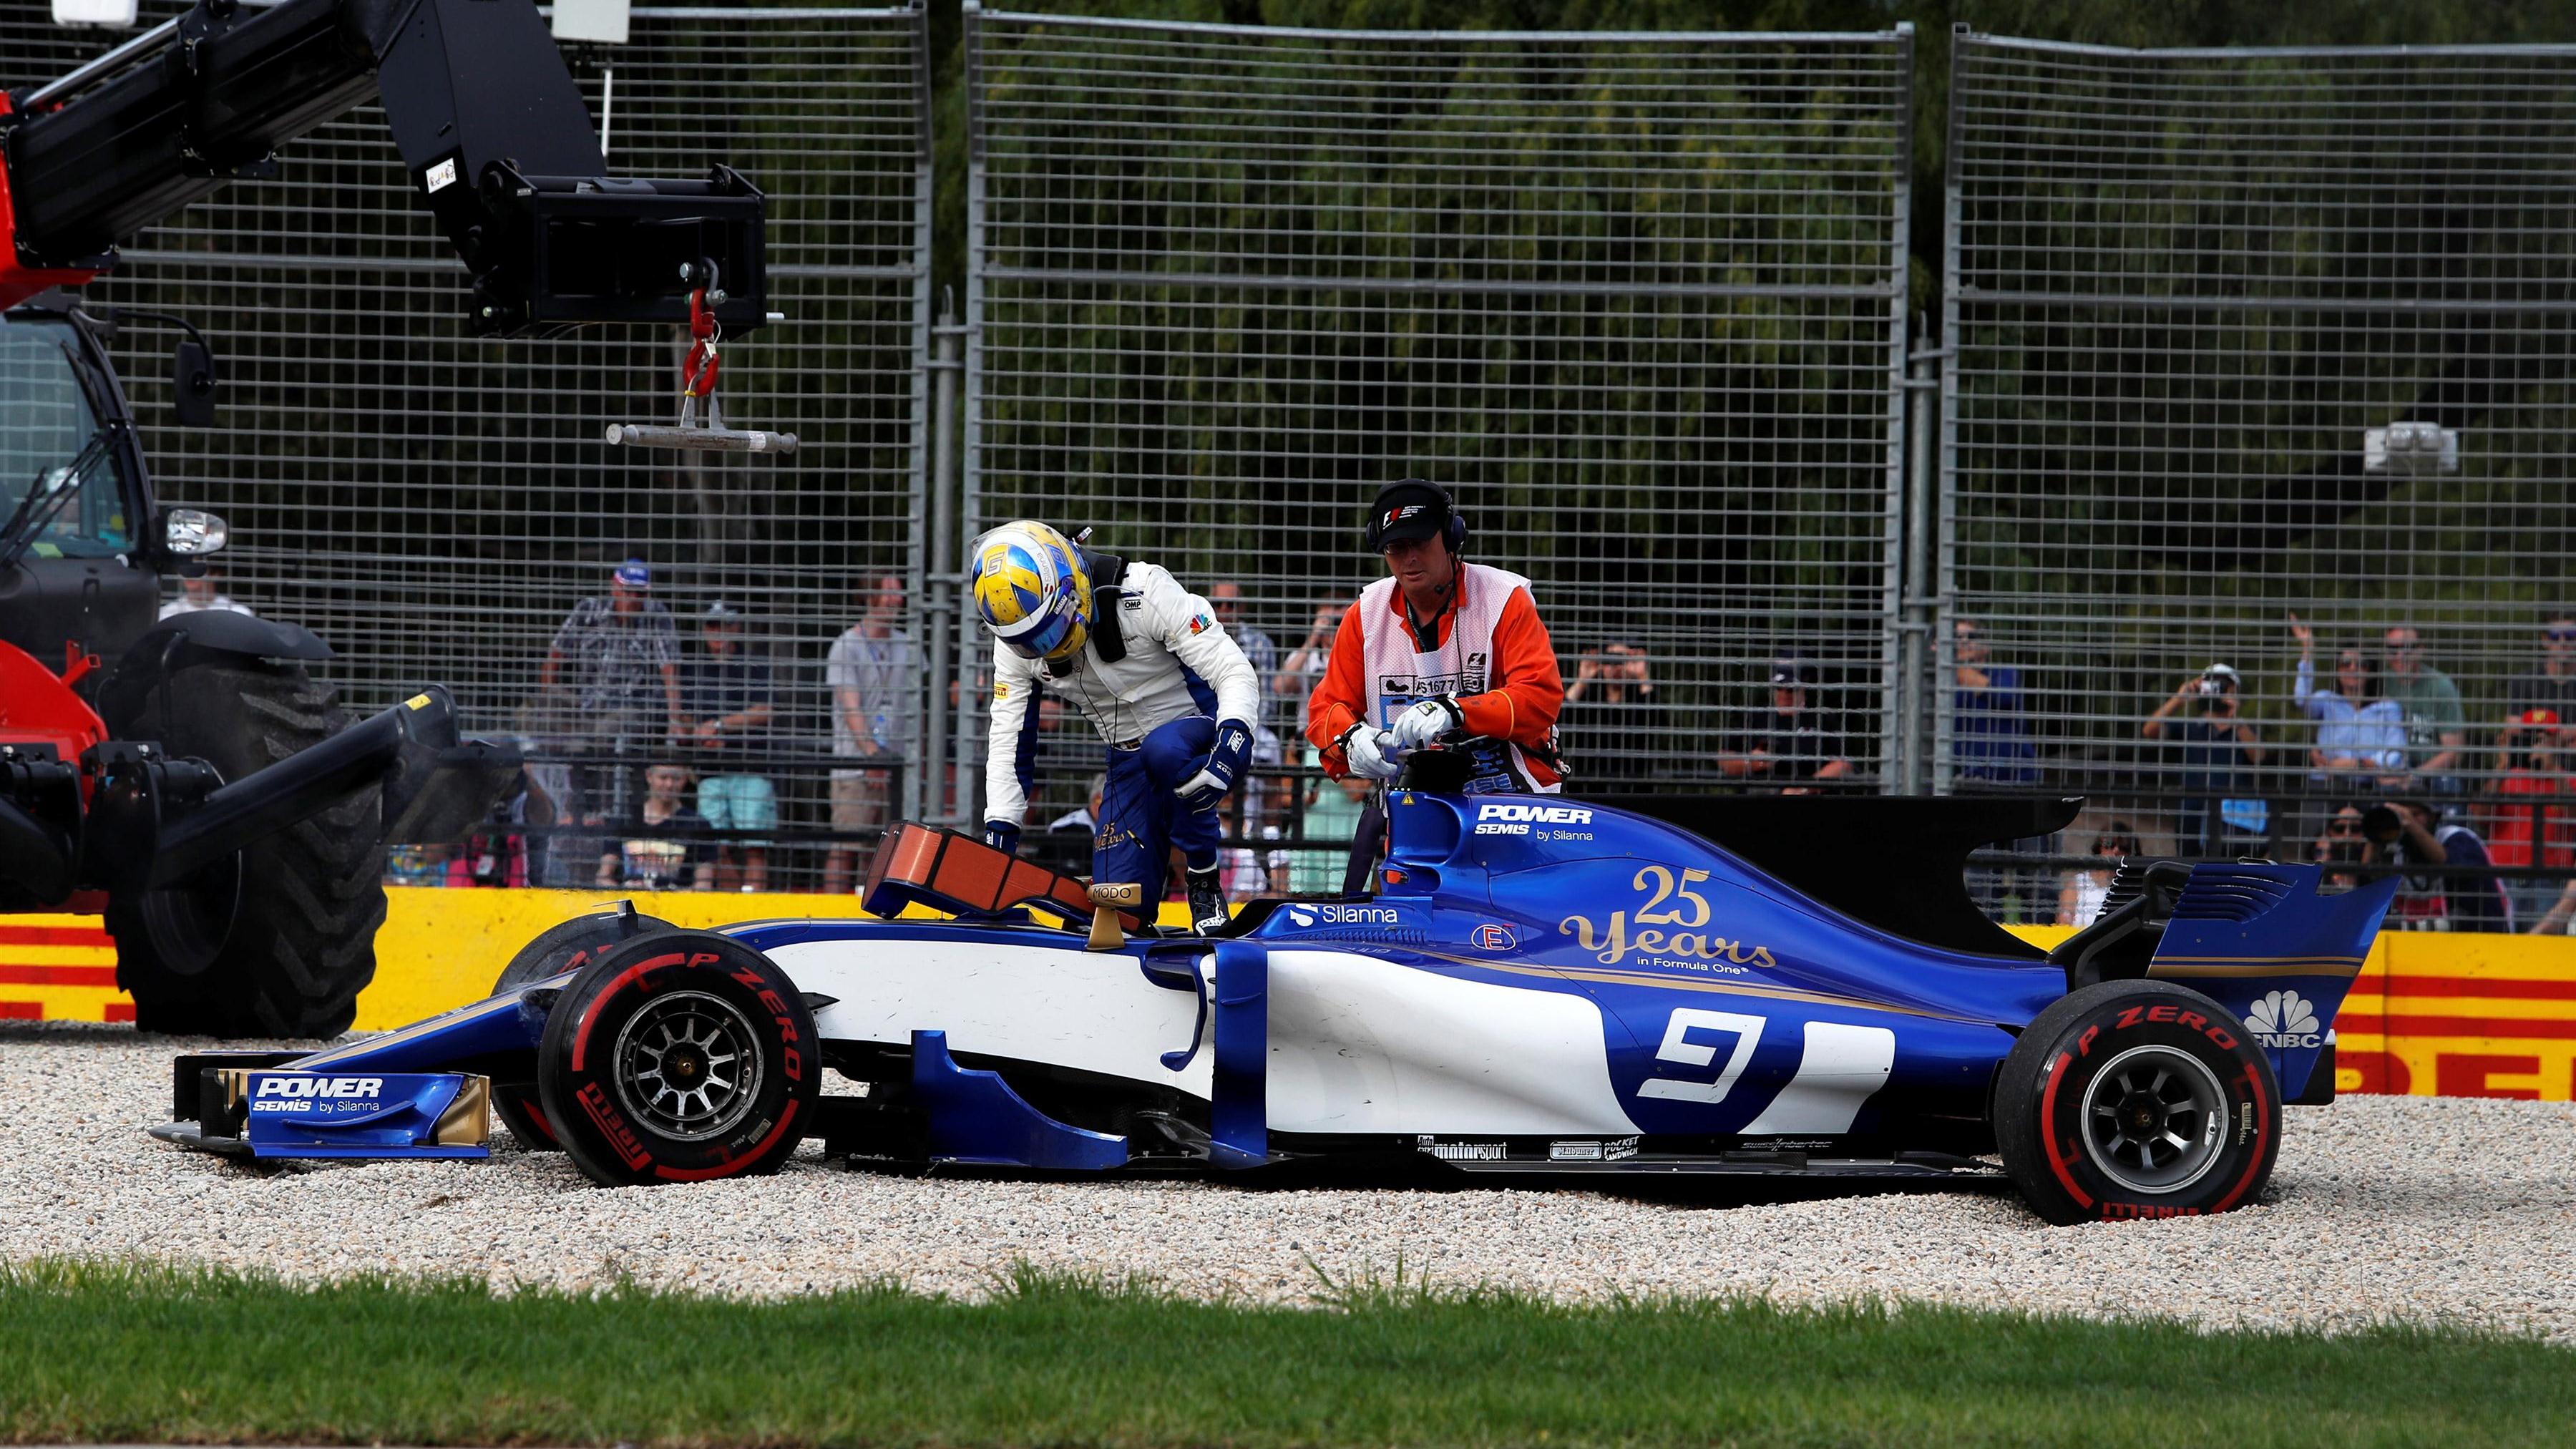 Carlos Pace, Formula 1 Wiki